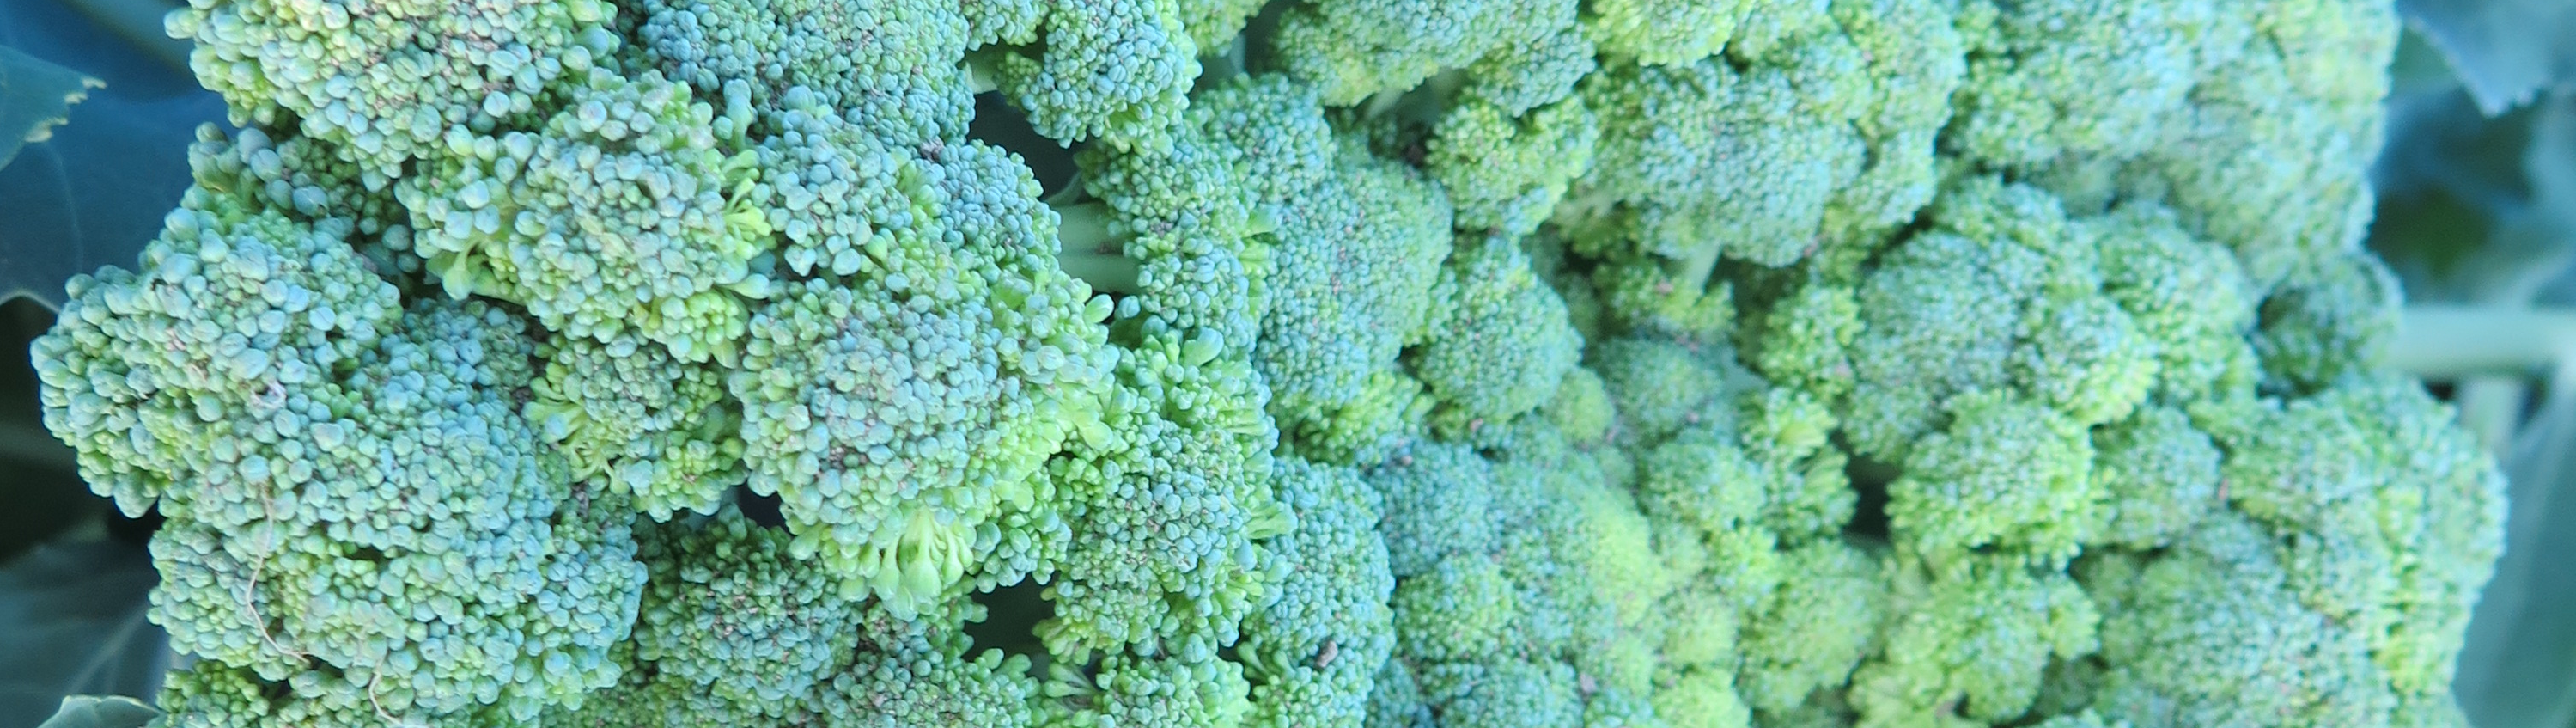 Brocoli en fleurs - Bolting Broccoli